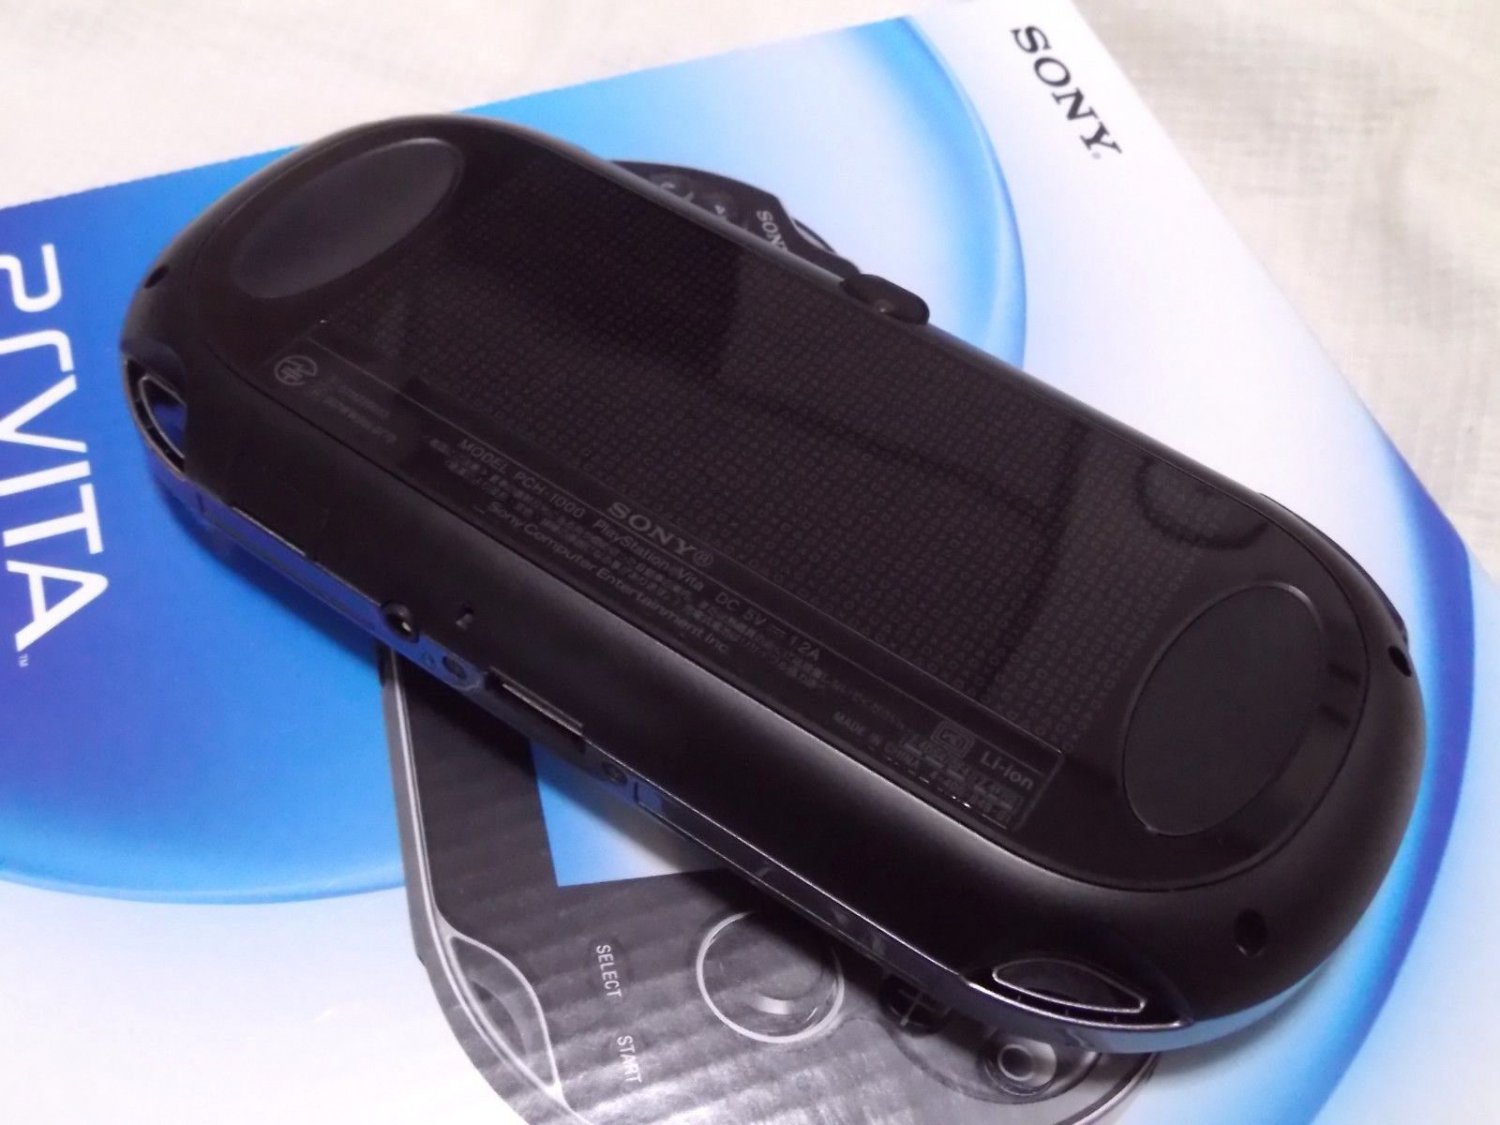 USED SONY PS Vita Console System PCH-1000 ZA01 BLACK Wi-fi Model